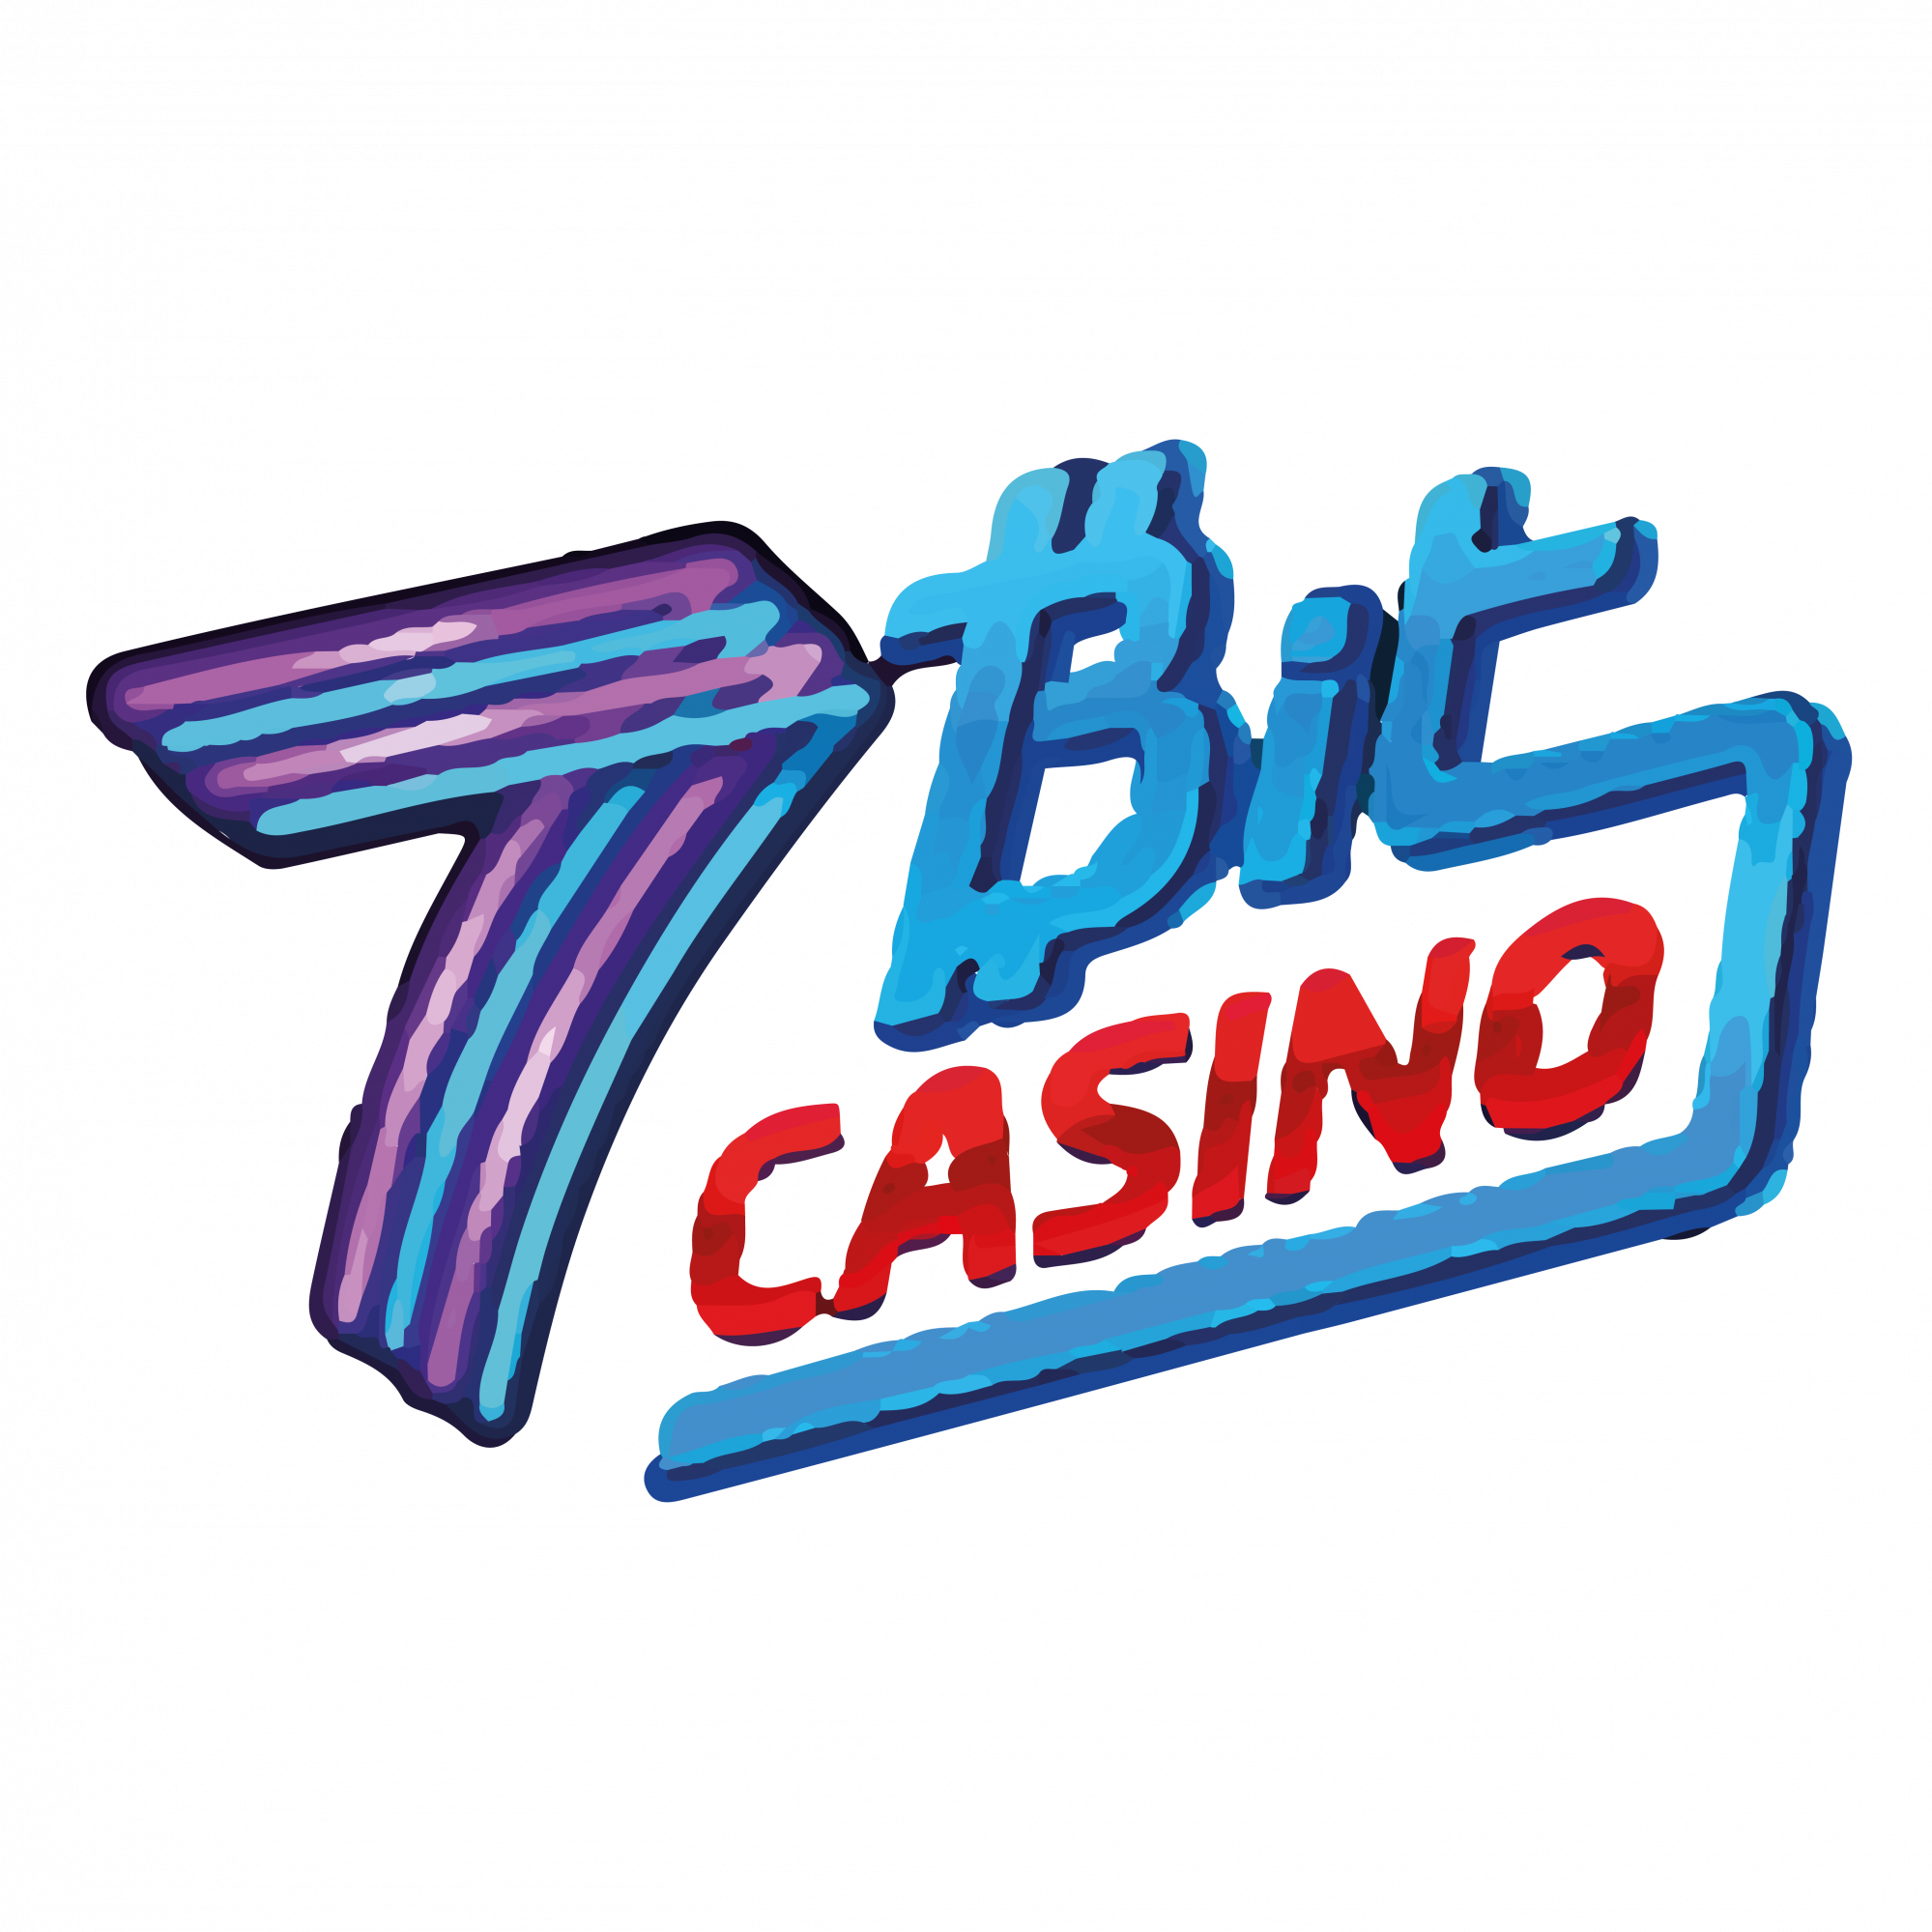 7Bit casino